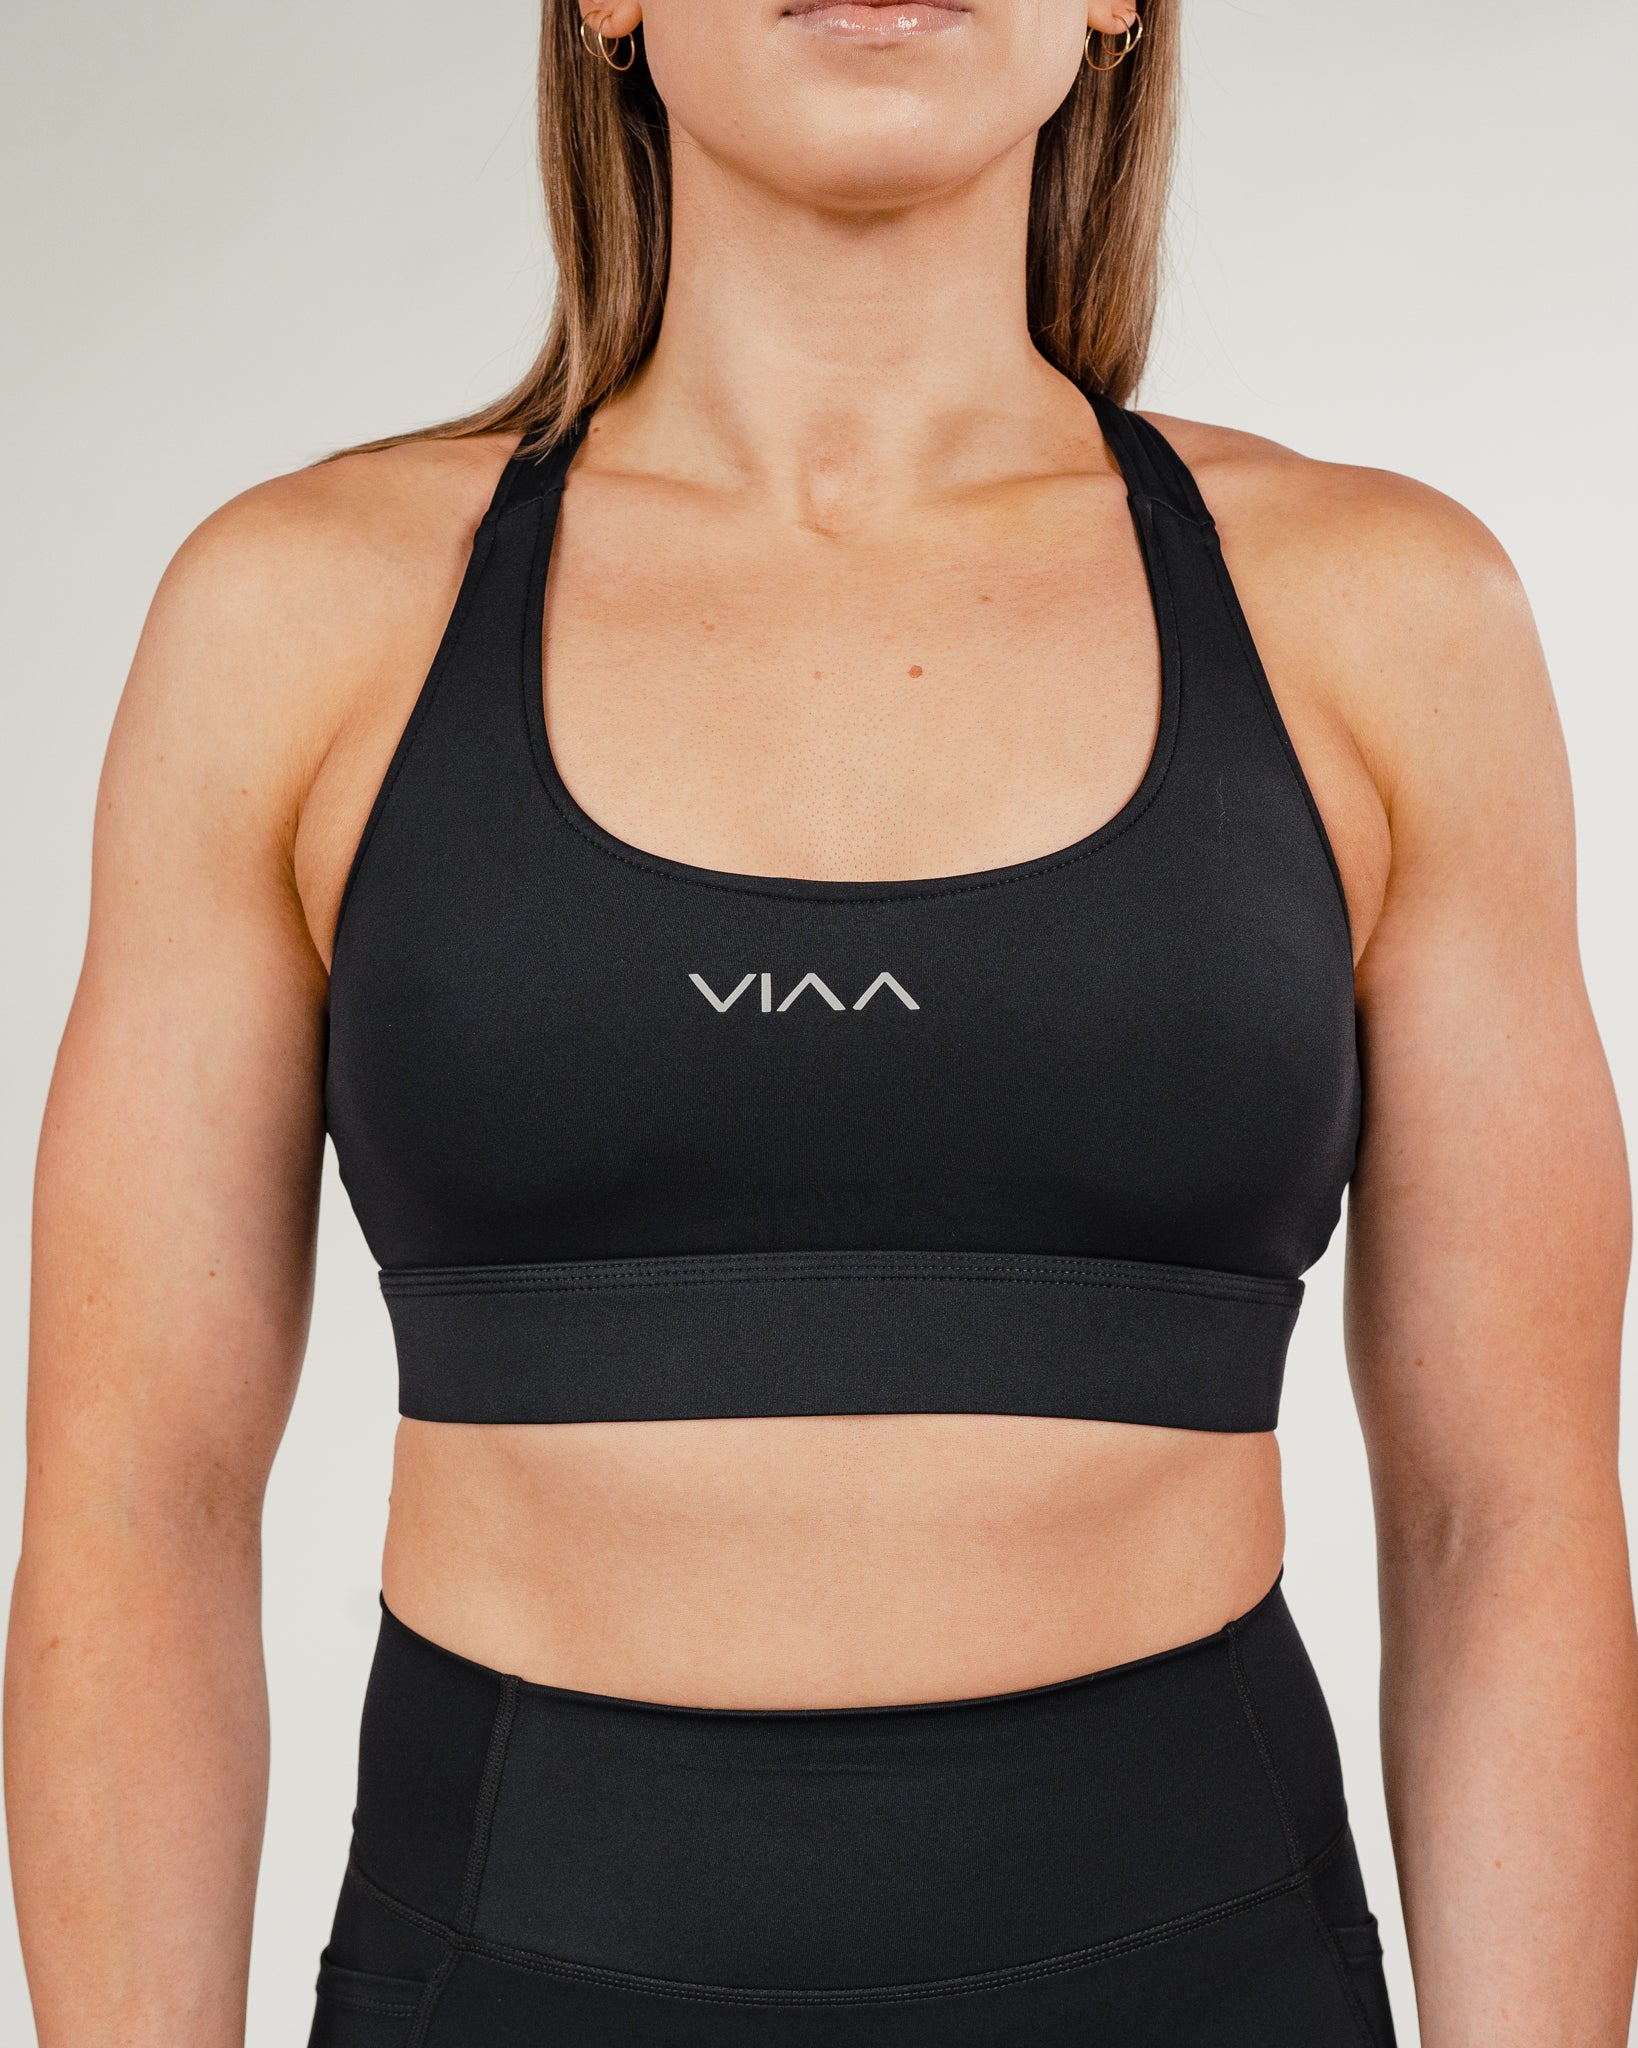 Women's bra ZSport Fitline Vitality - Bras - Women's clothing - Fitness